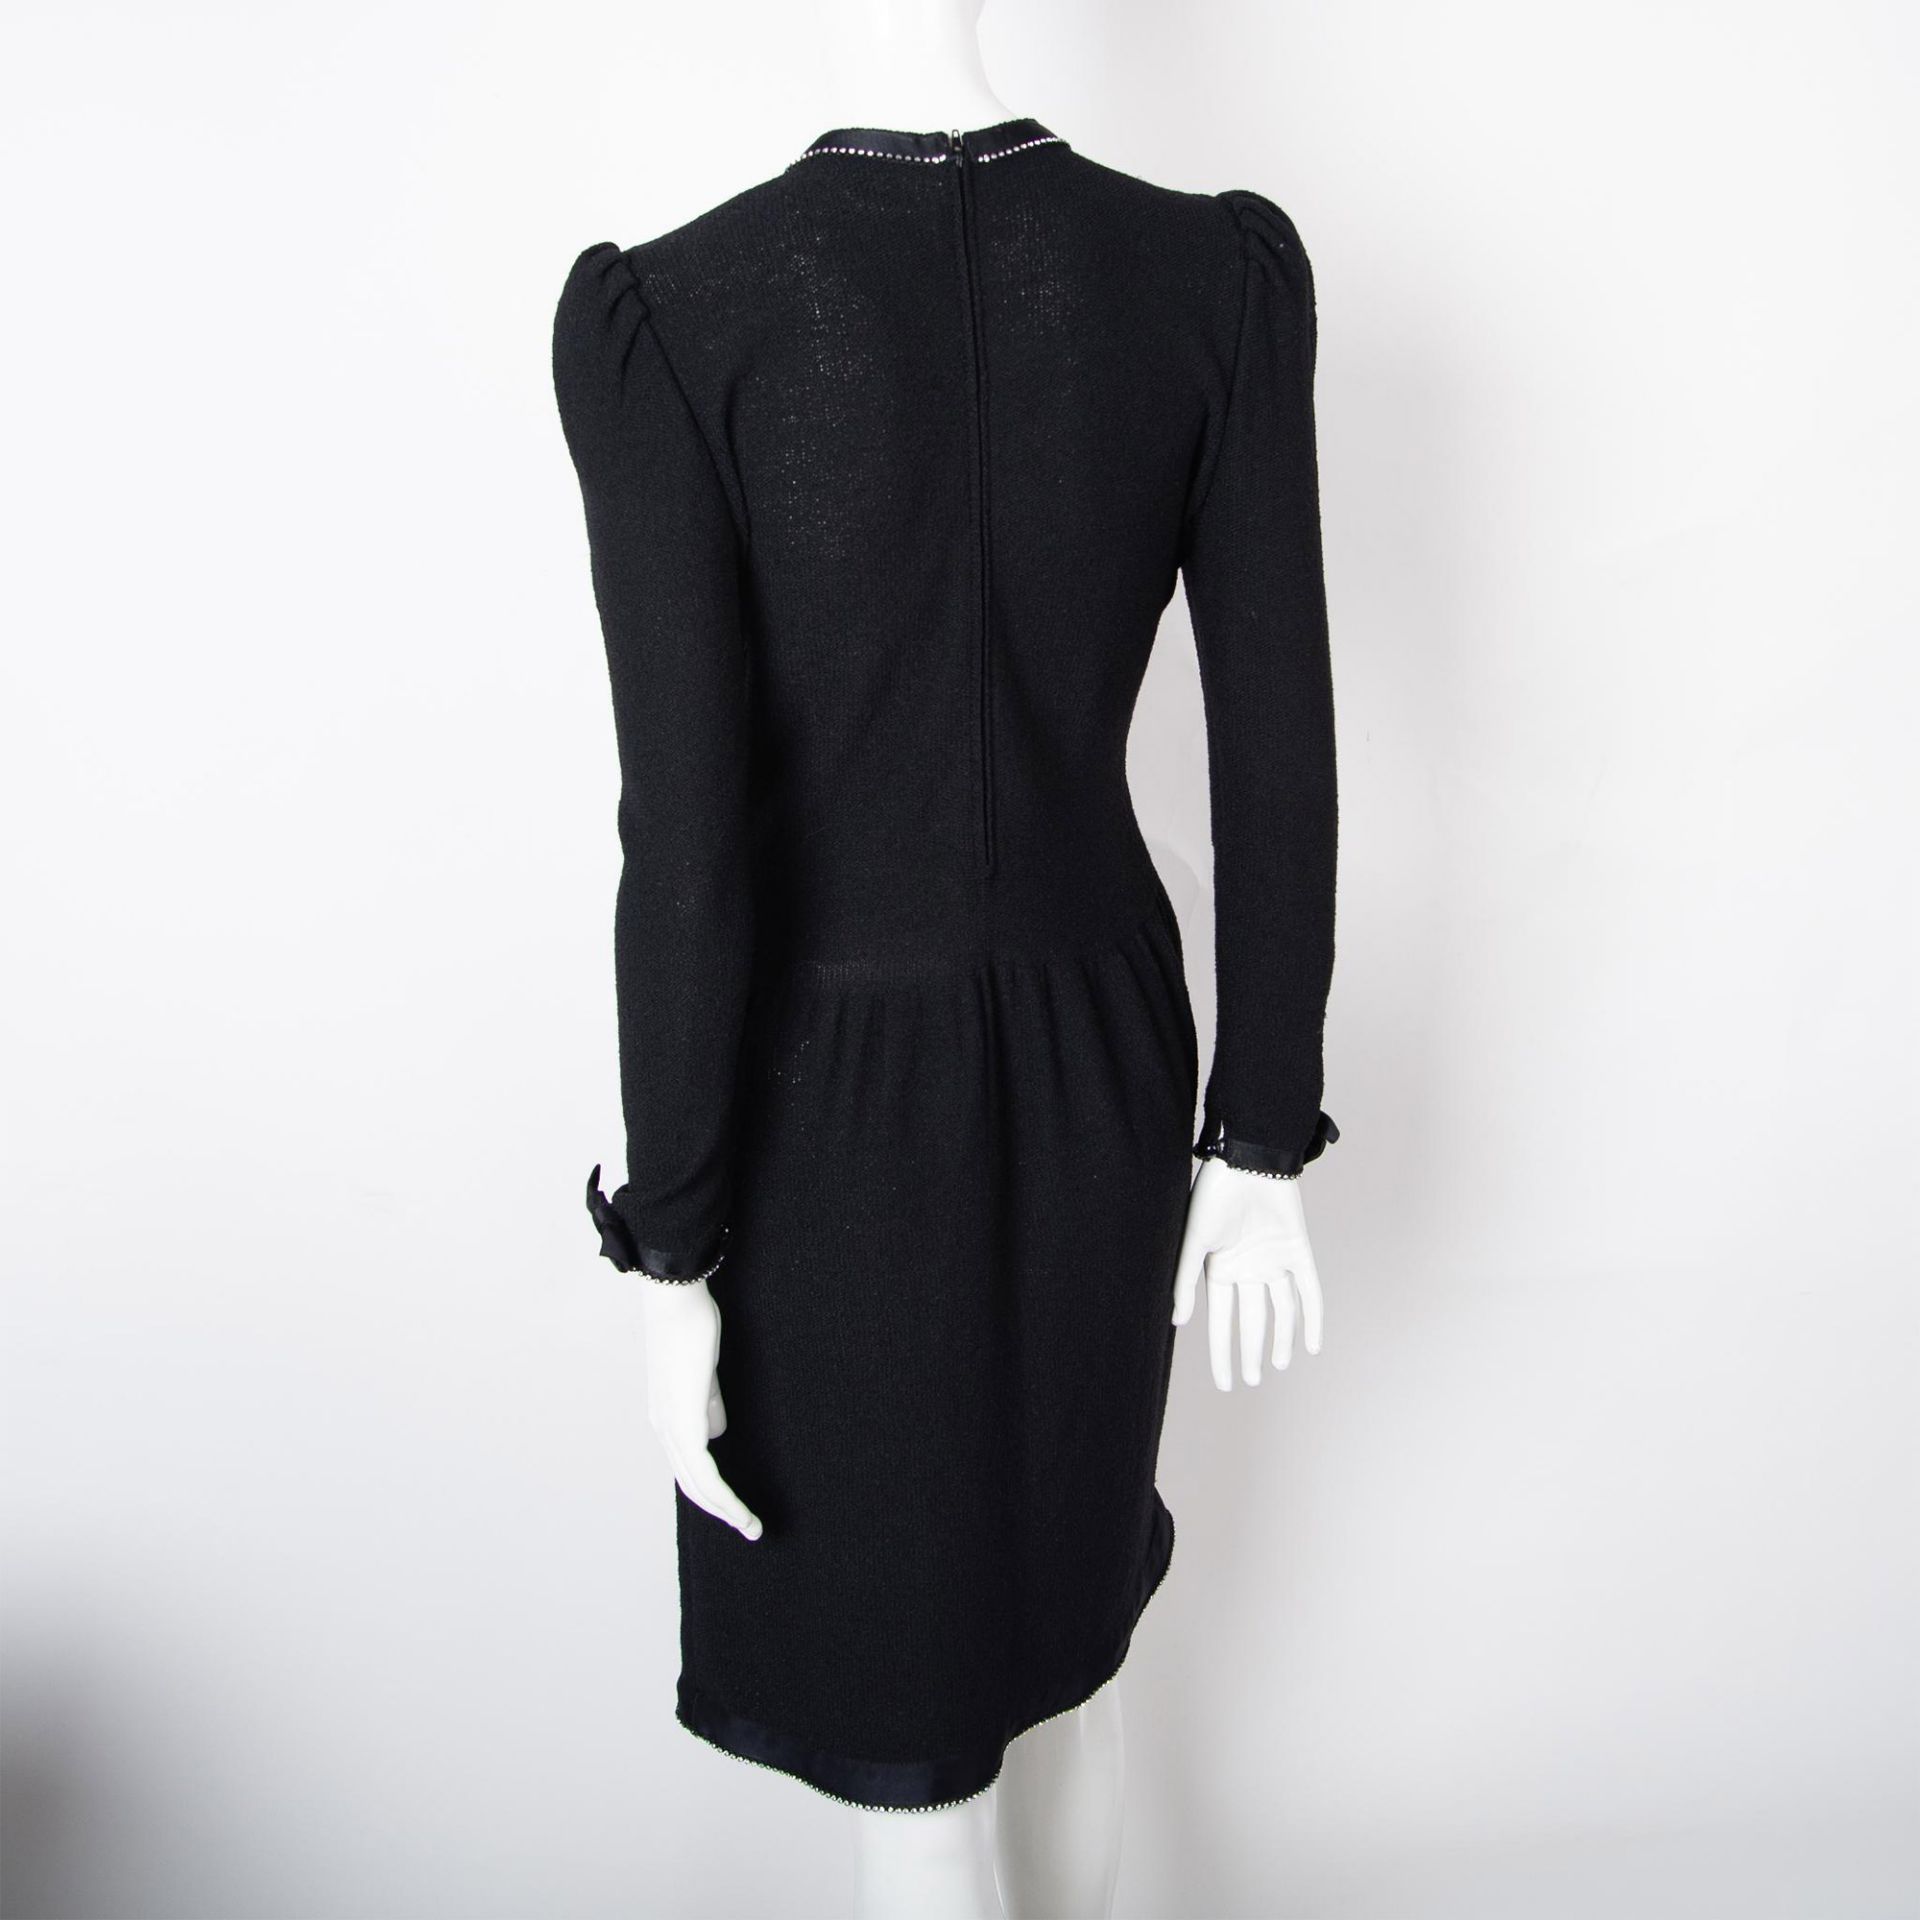 Adolfo for Neiman Marcus Rhinestone & Bow Knit Dress, Size Small - Image 6 of 8